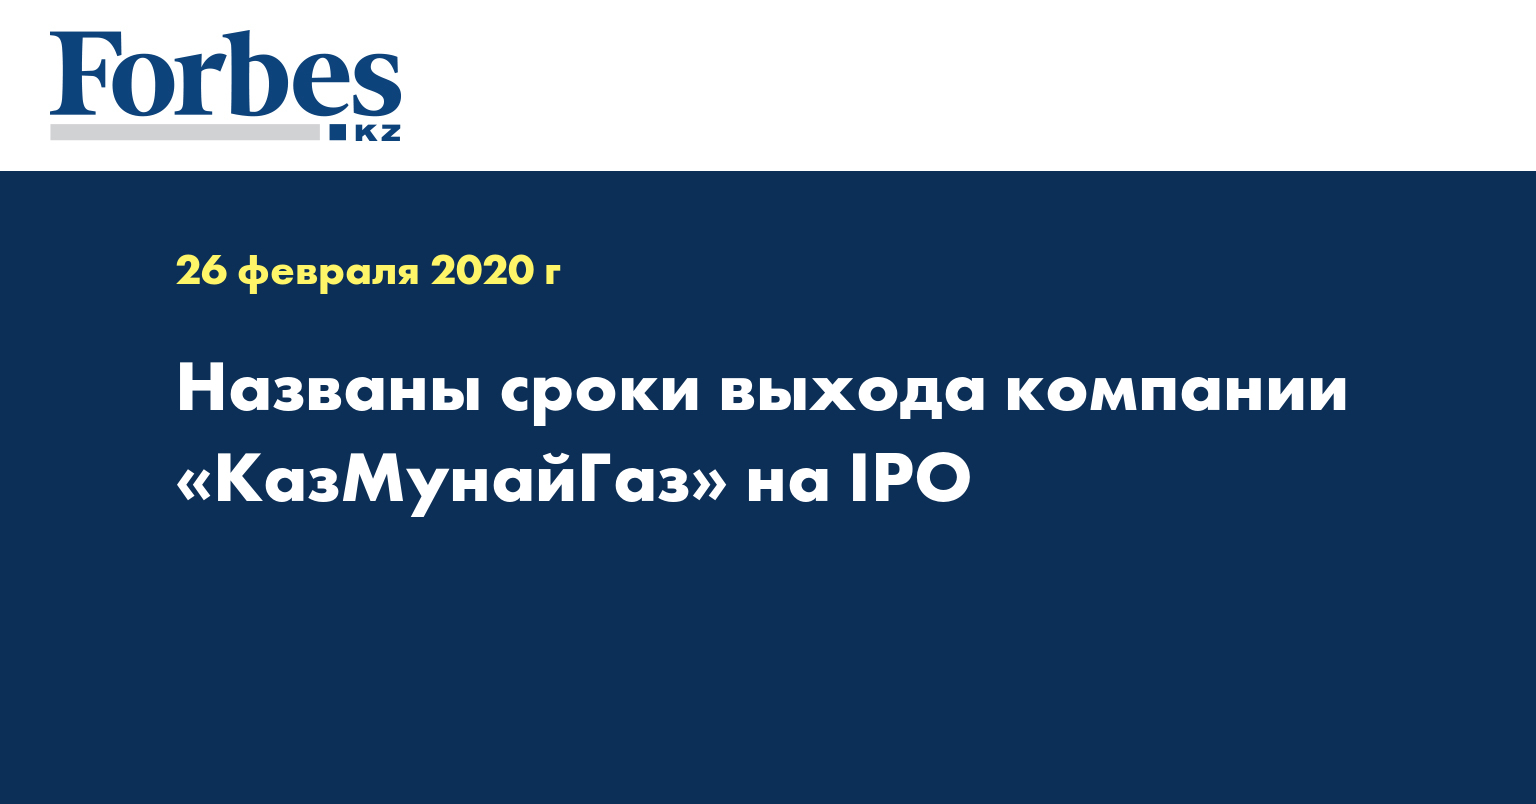 Названы сроки выхода компании «КазМунайГаз» на IPO